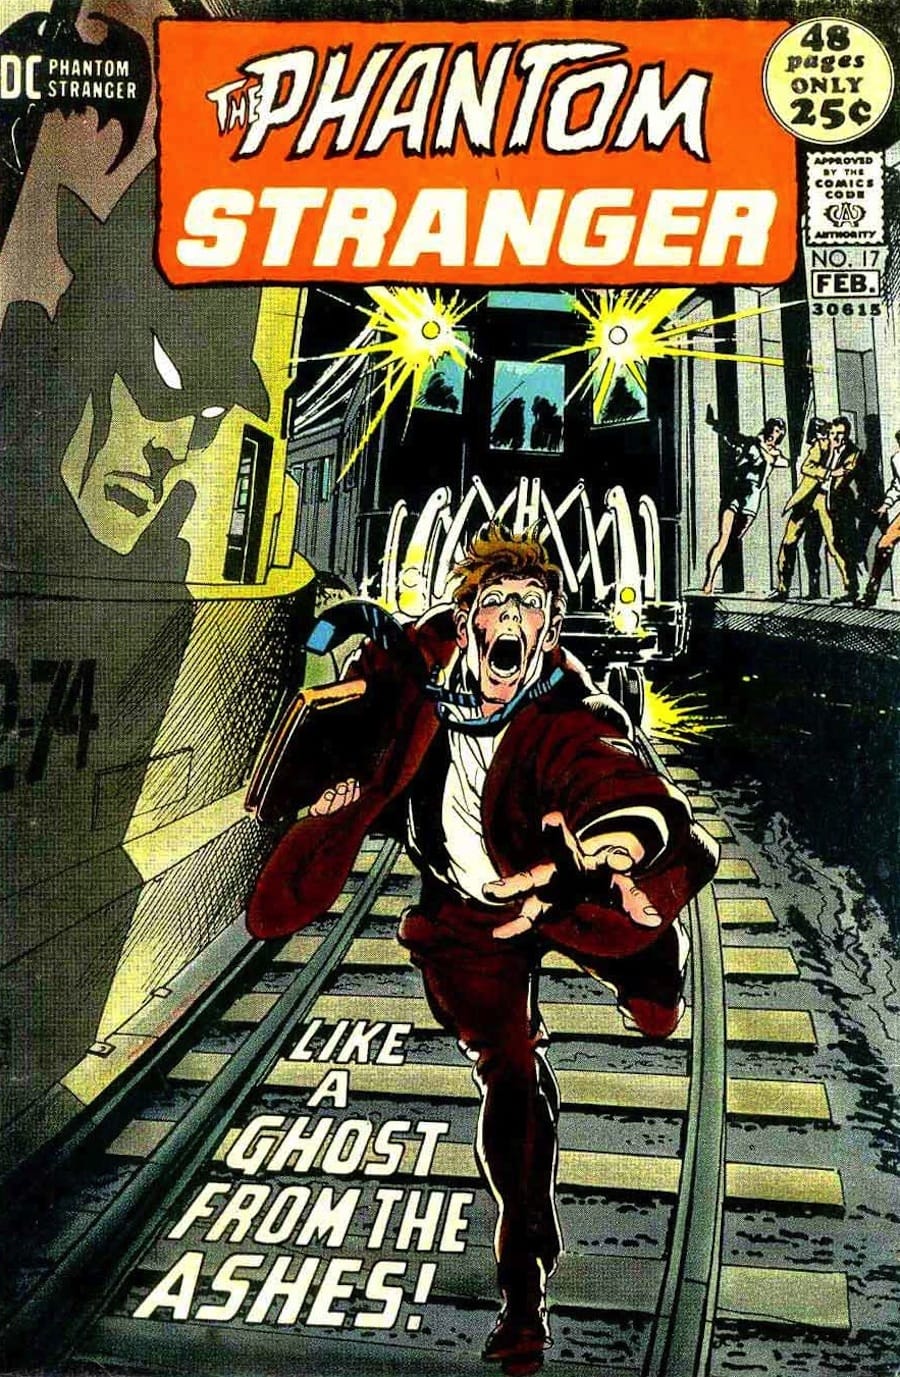 Phantom Stranger #17 - 1970s dc horror comic book cover art by Neal Adams